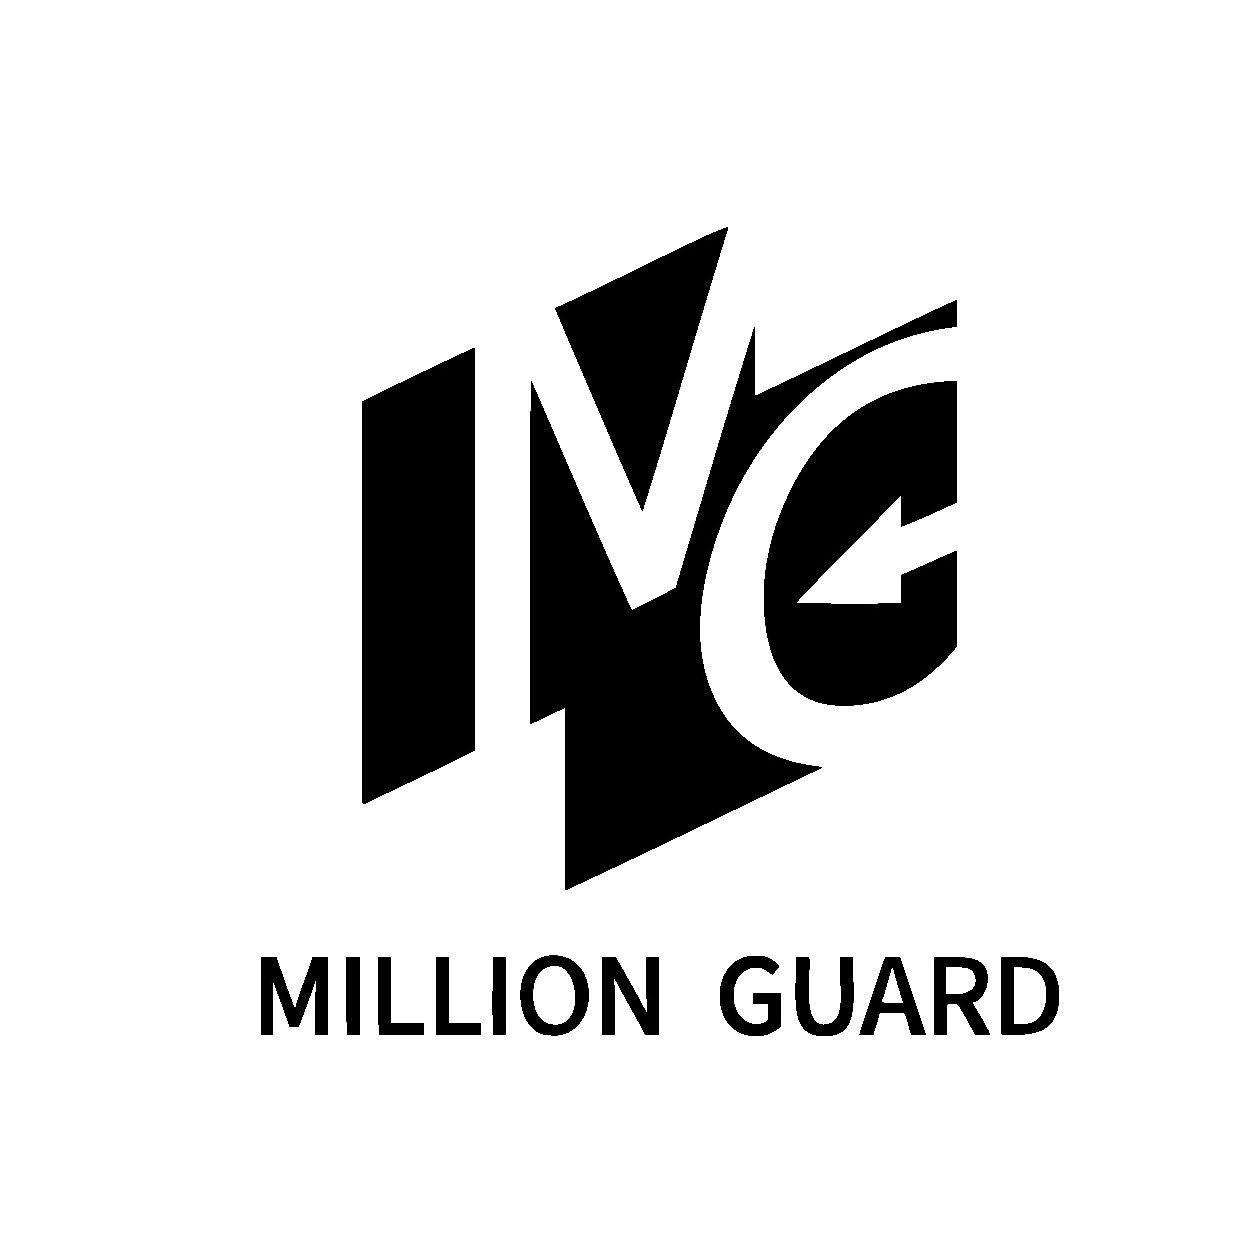  MG MILLION GUARD